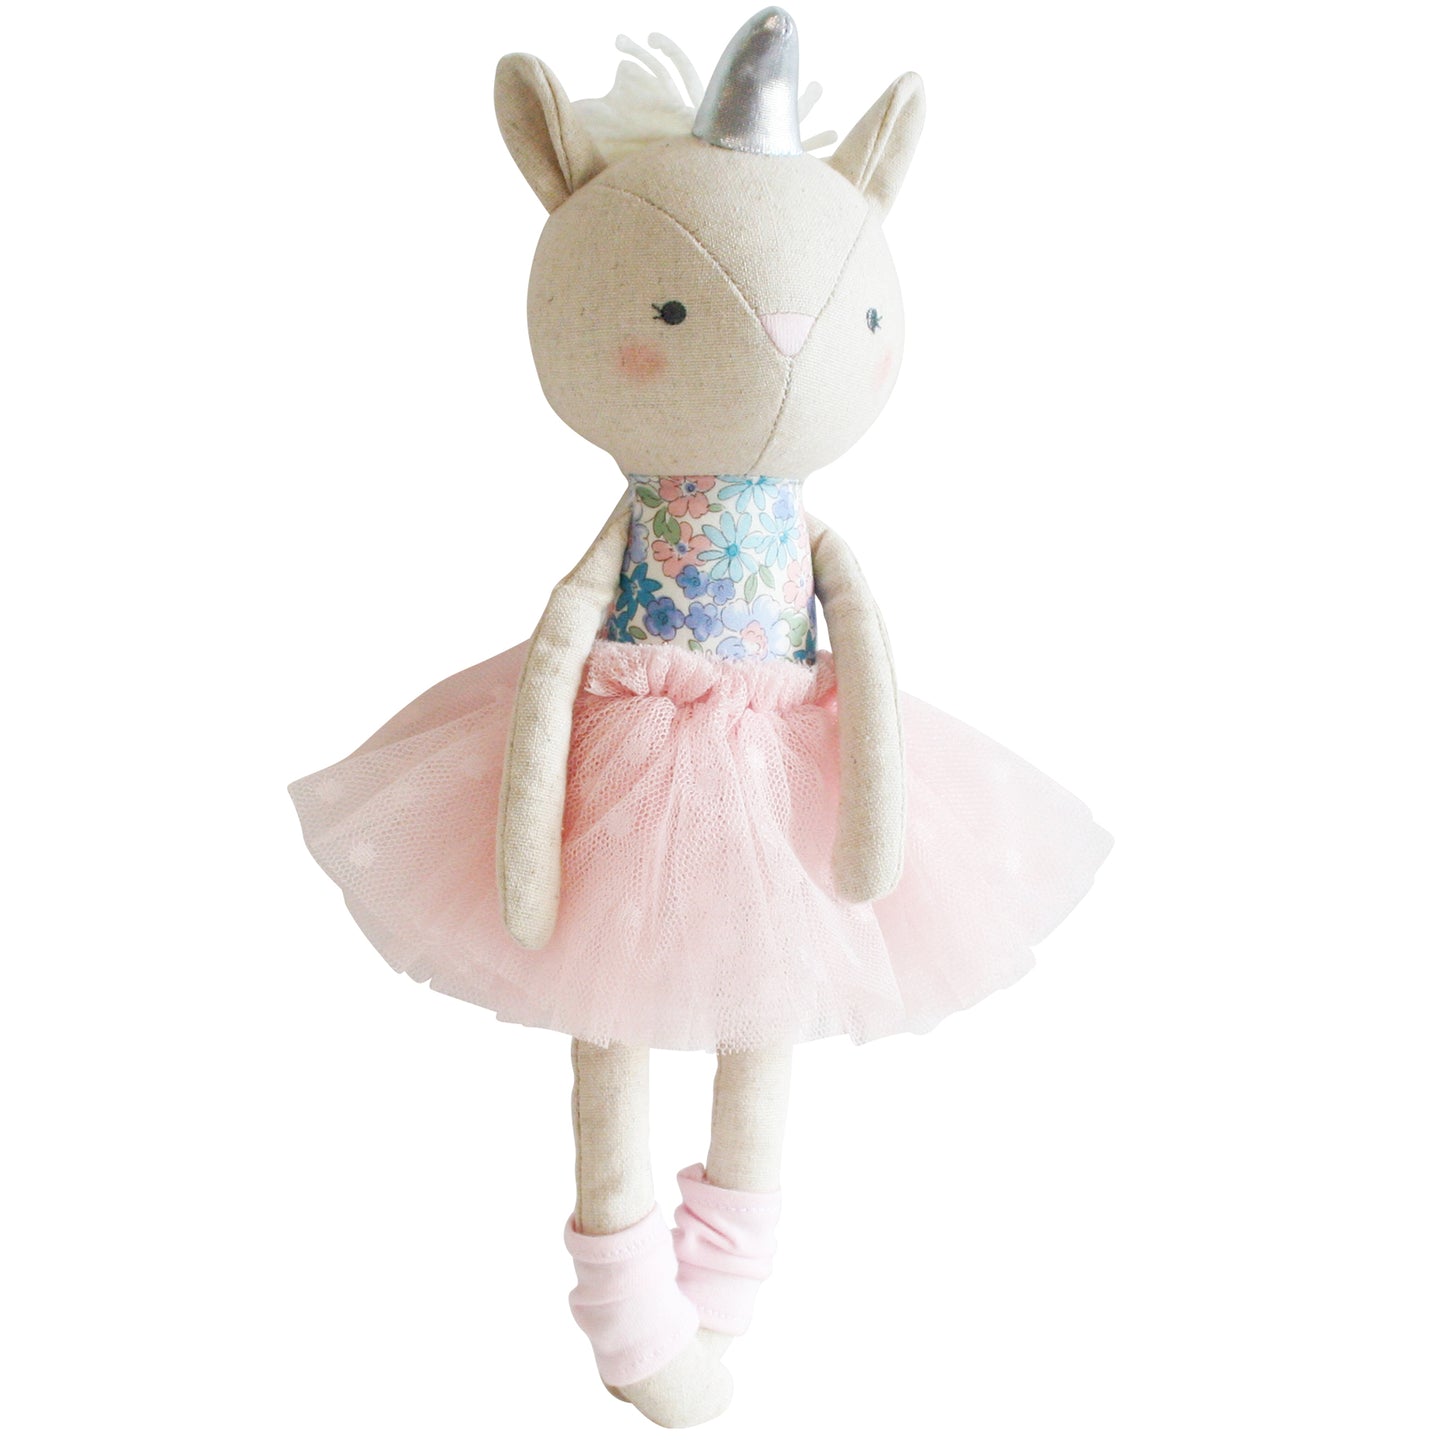 Baby Unicorn Doll 32cm Liberty Blue